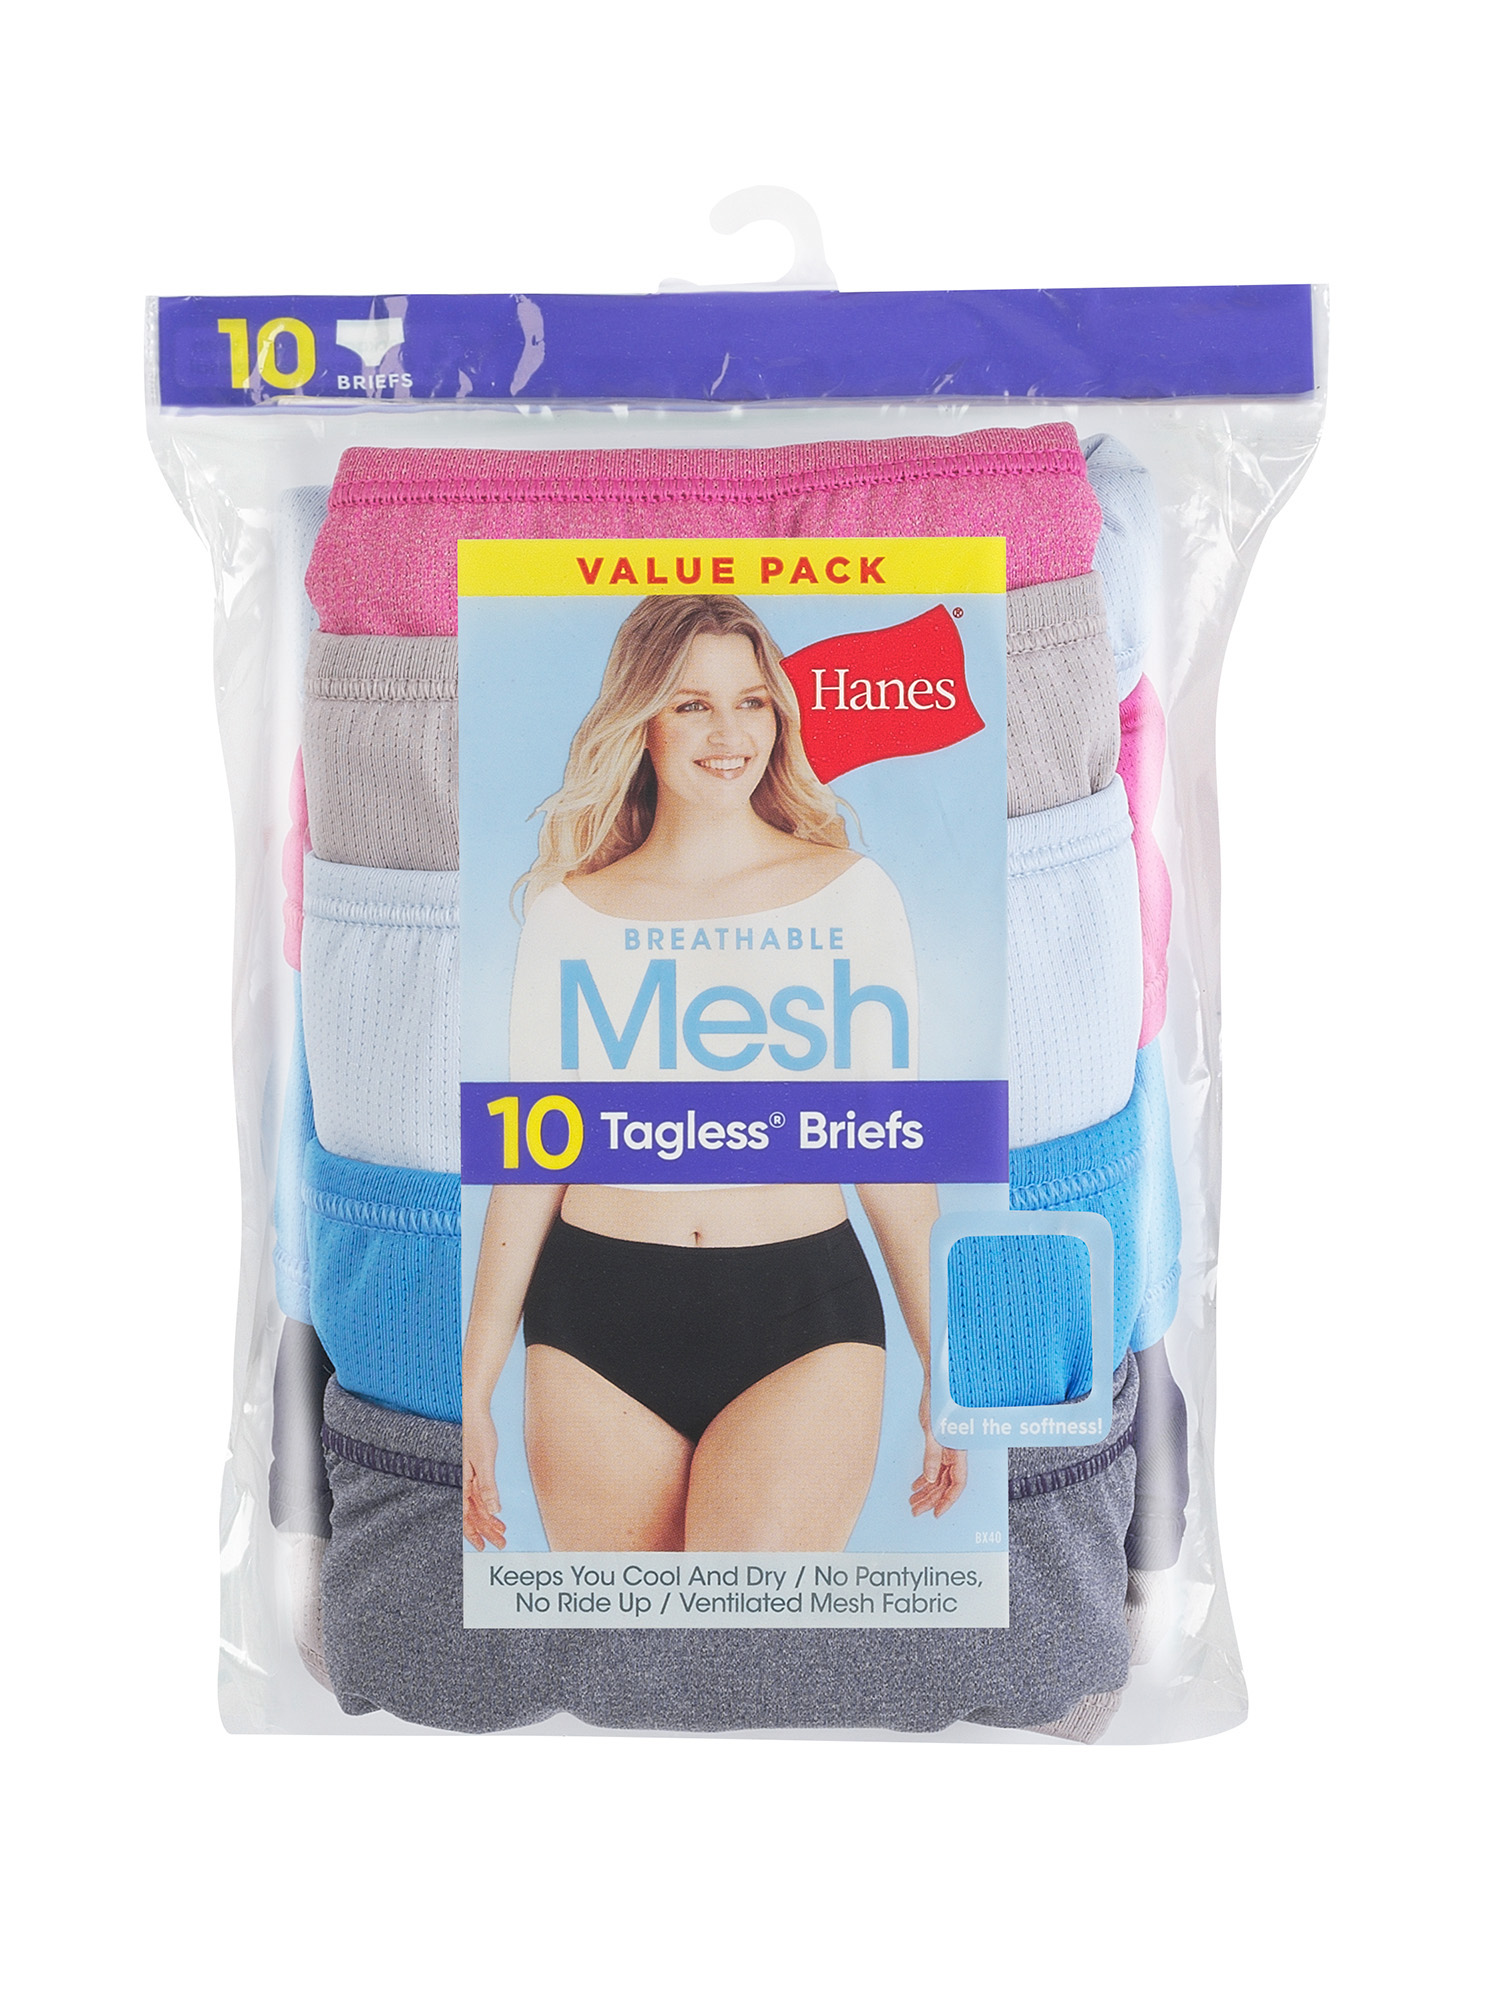 Hanes Women's Breathable Mesh Brief Underwear, 10 Pack - image 2 of 7